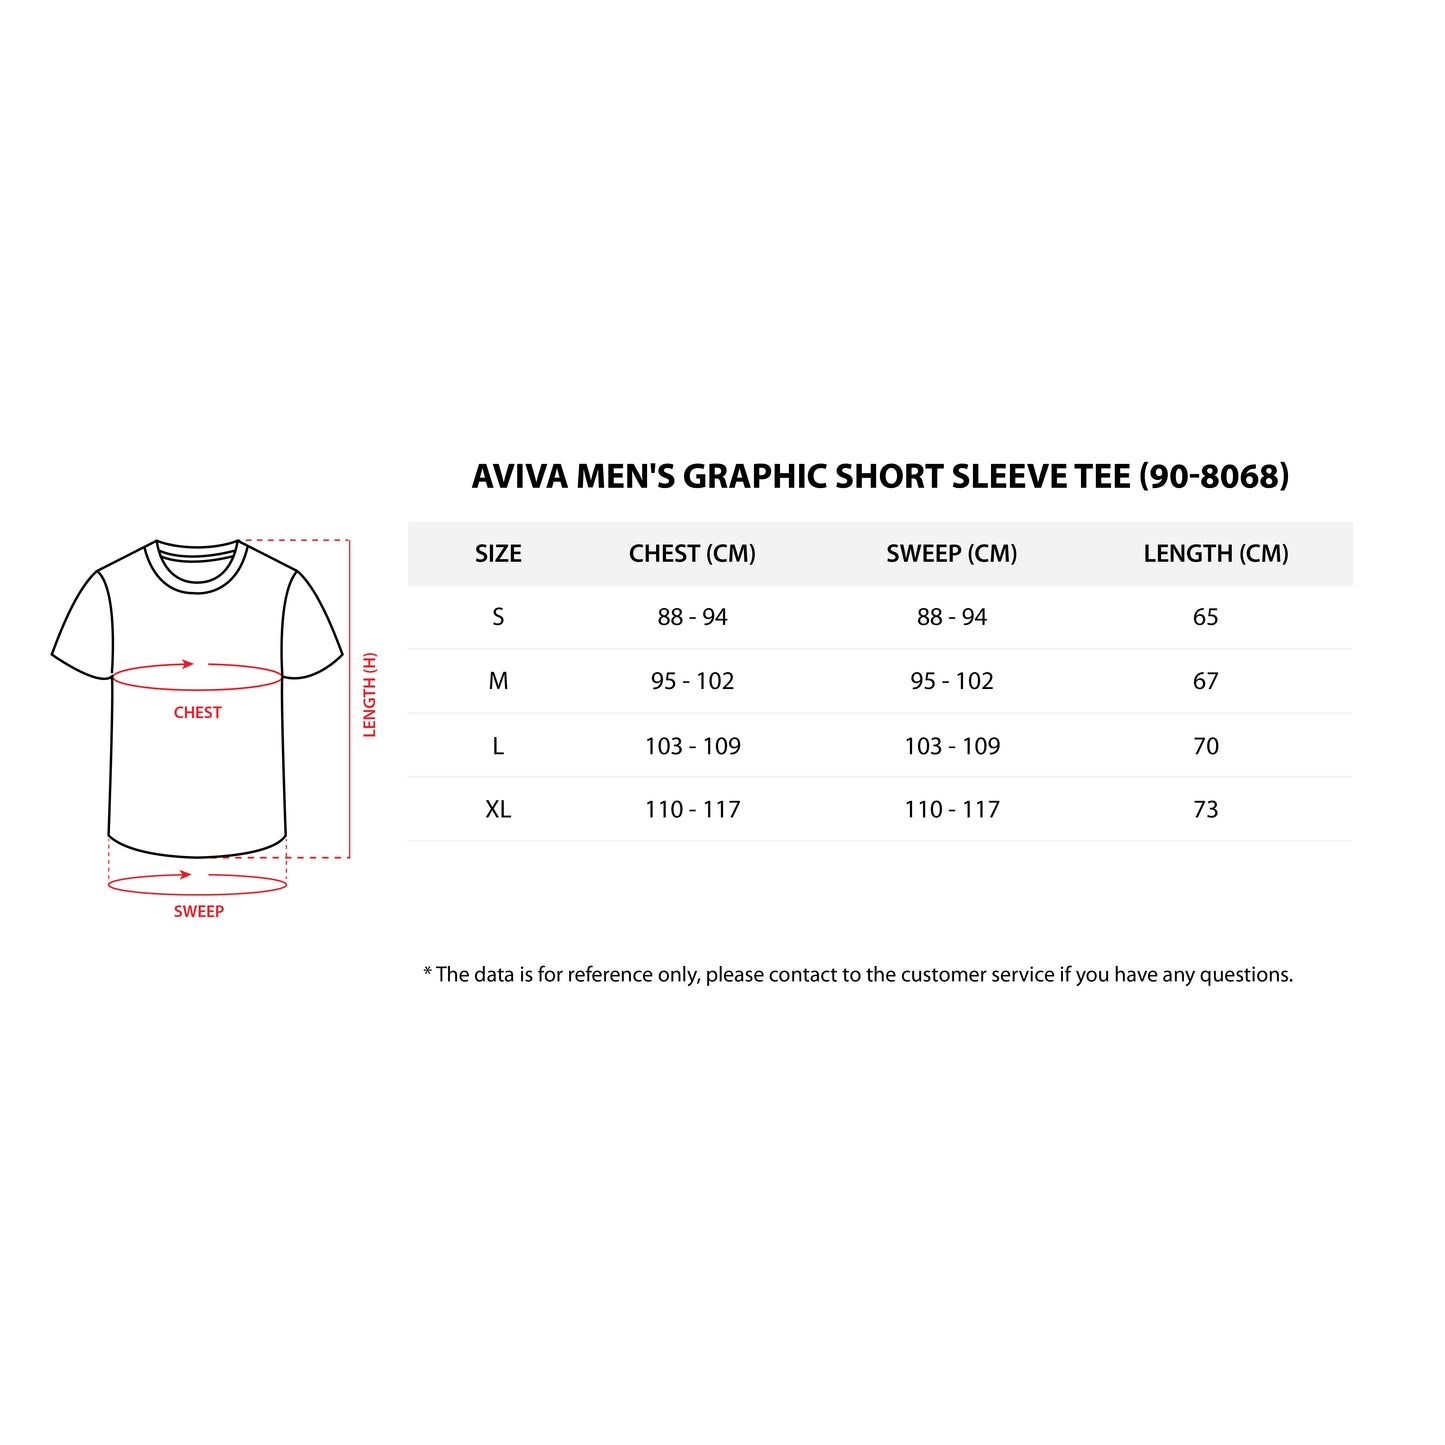 Aviva Men's Graphic Short Sleeve Tee (90-8068)